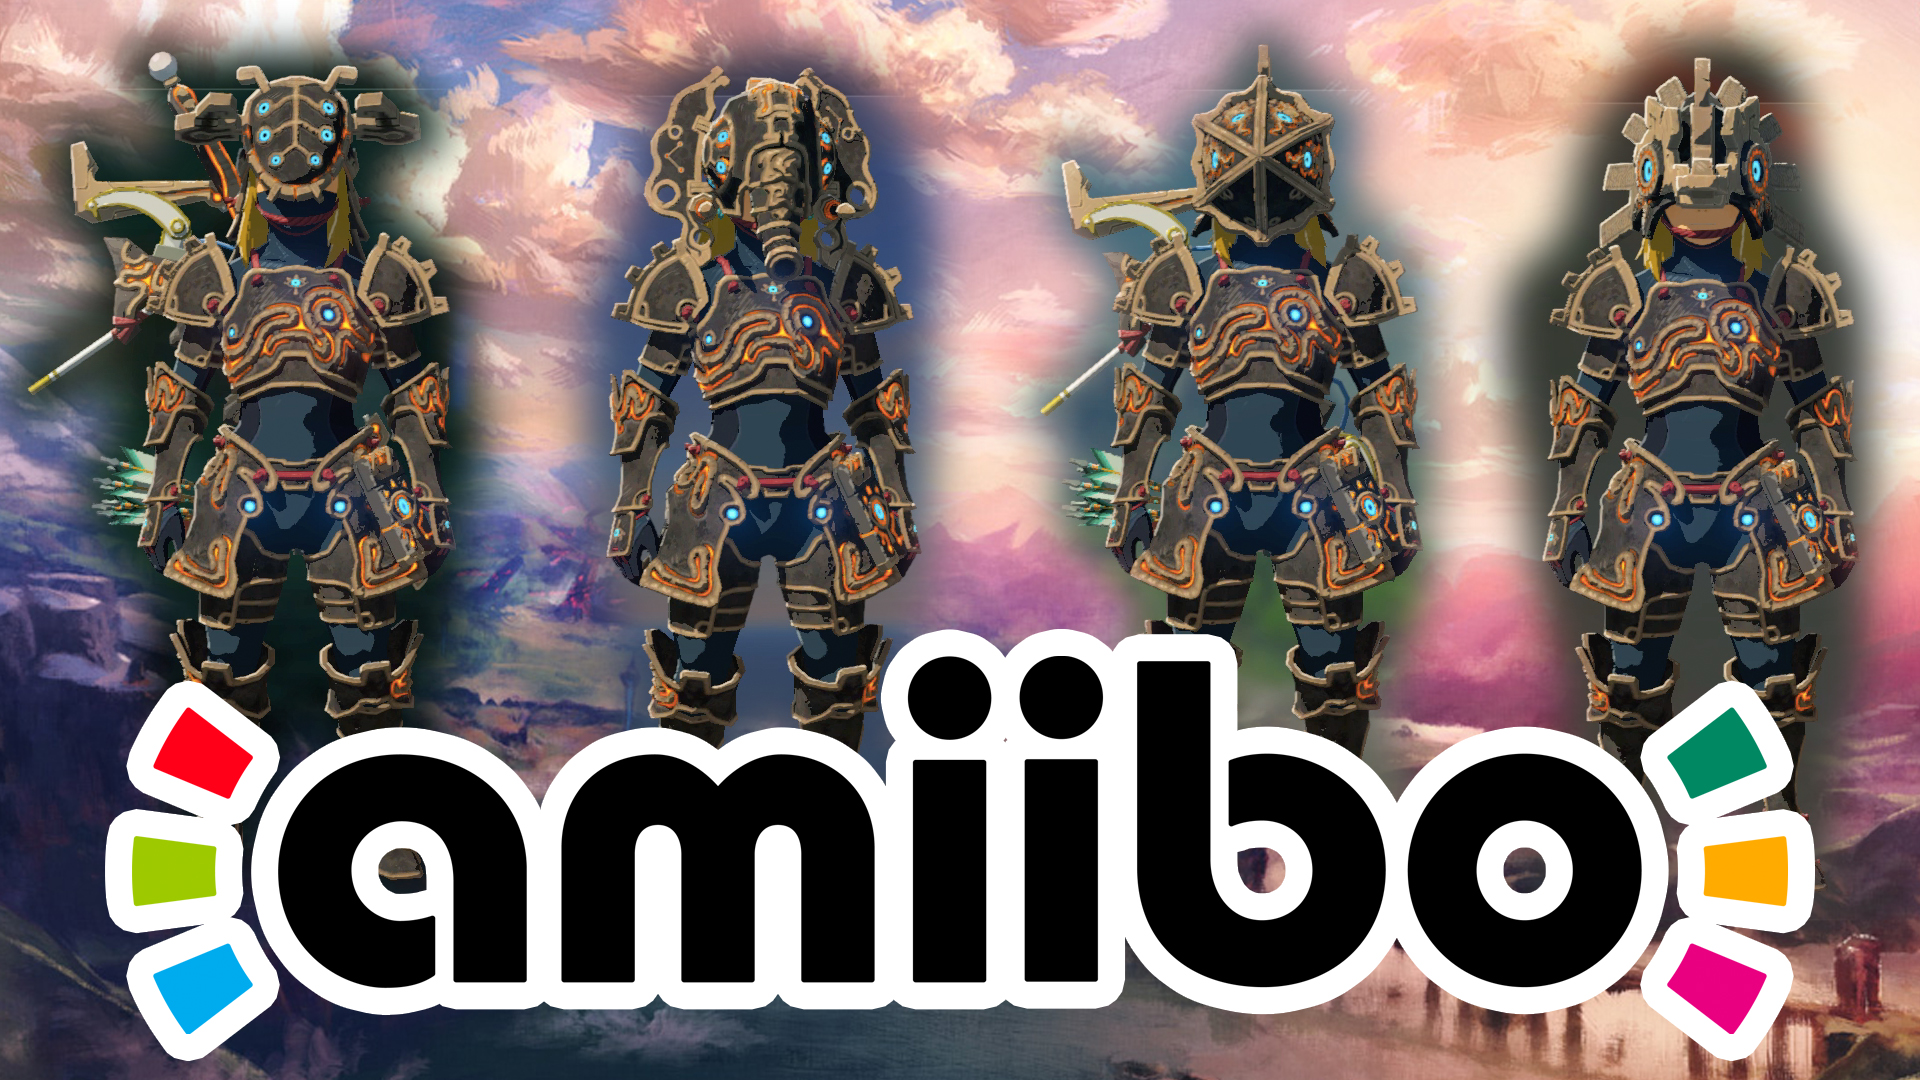 Breath of the Wild - Champion amiibo Functions and Gameplay | Mon Amiibo.com